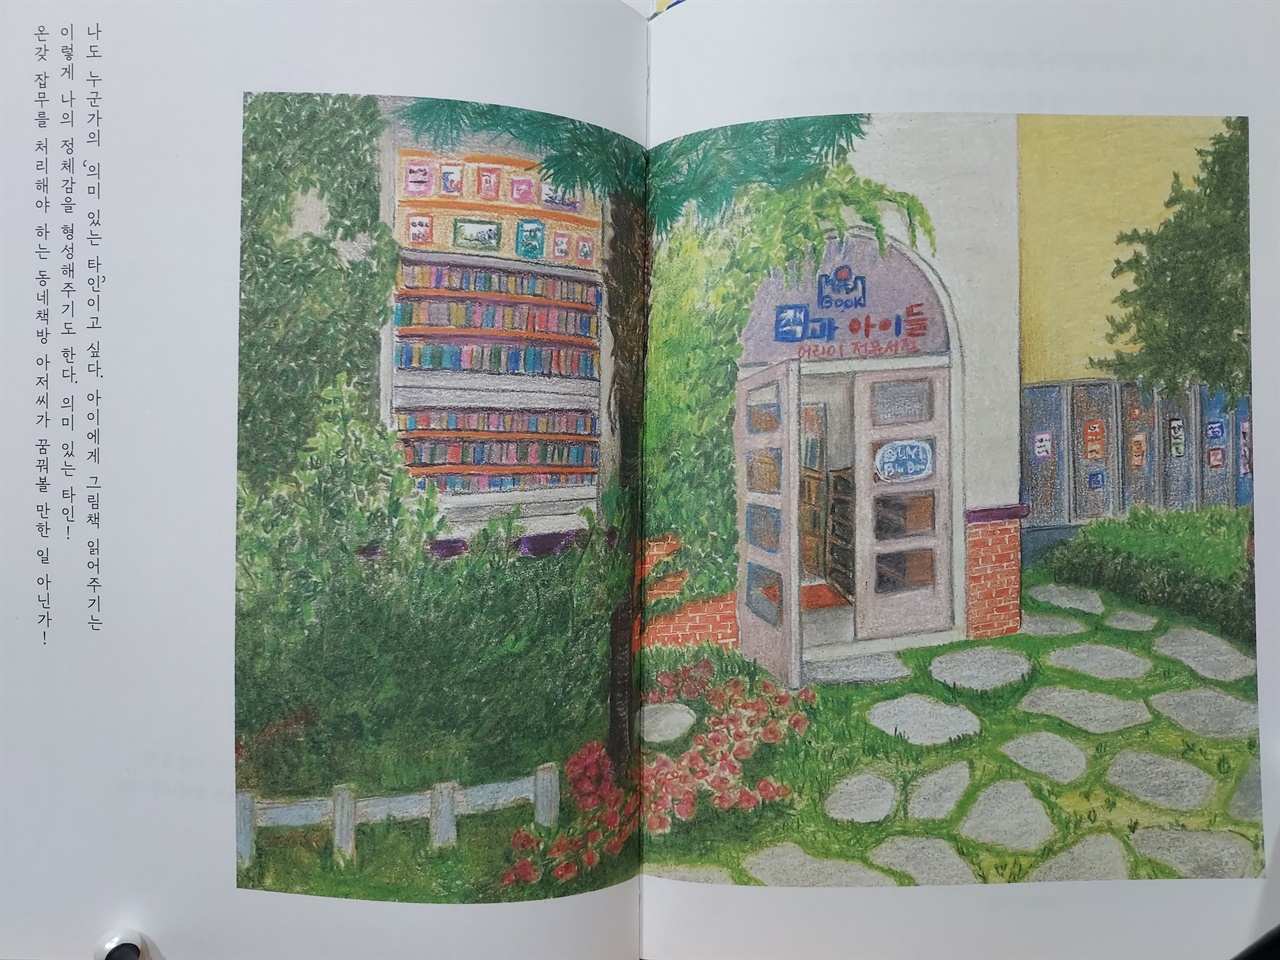 p270~271에 펼쳐져 있는 책과아이들 그림